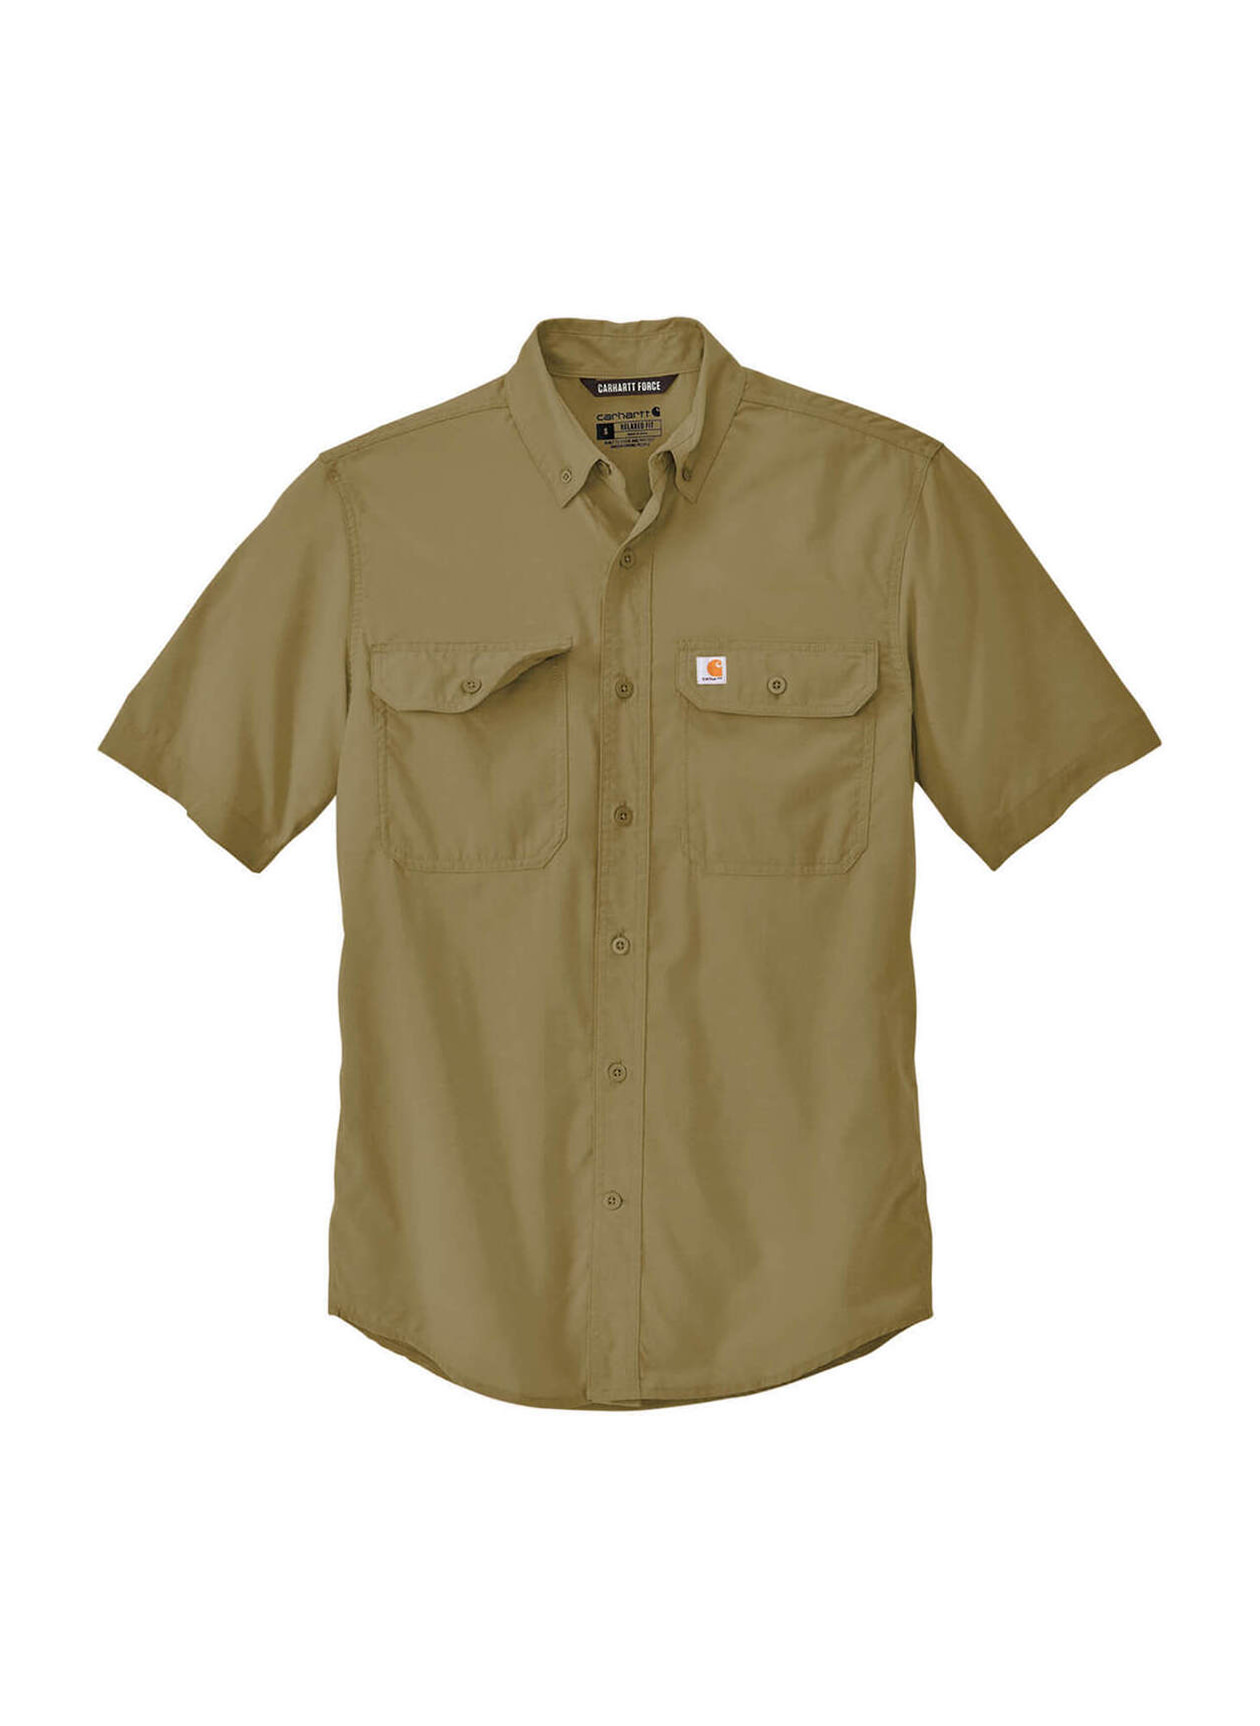 Embroidered Carhartt Men's Dark Khaki Force Solid Short-Sleeve Shirt